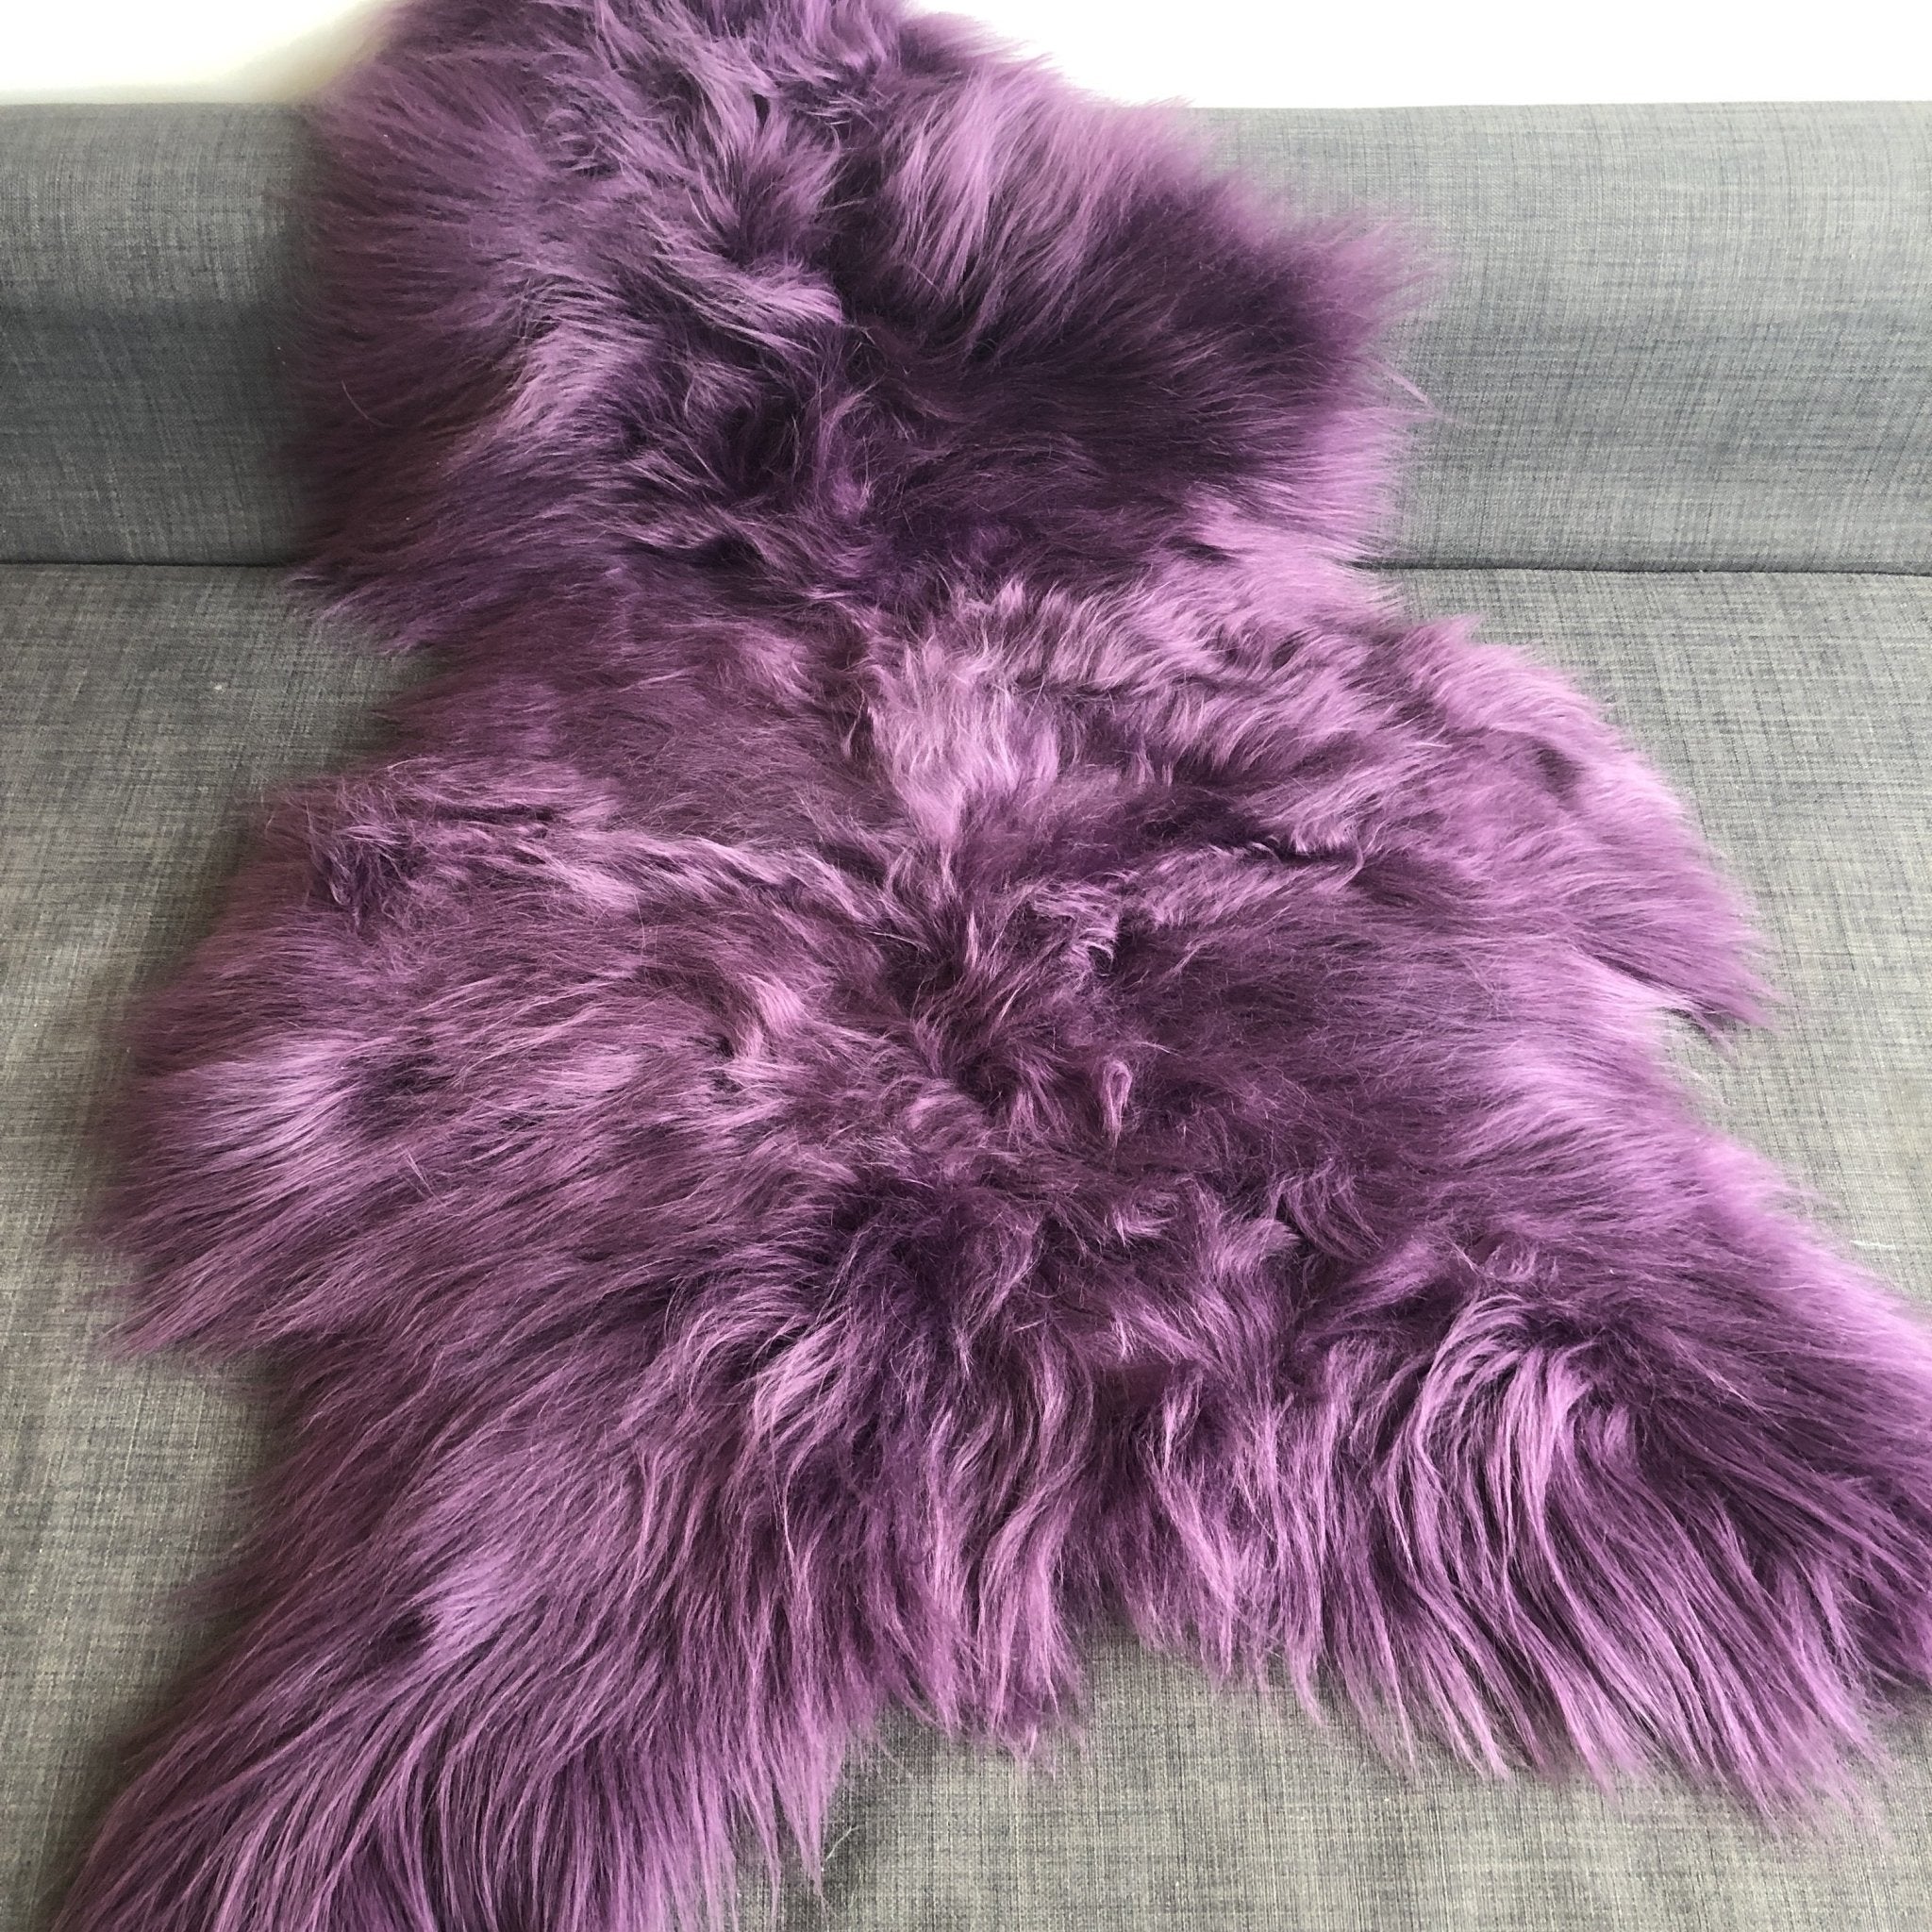 Swedish Sheepskin Rug African Violet Purple Long Fur Throw - Wildash London